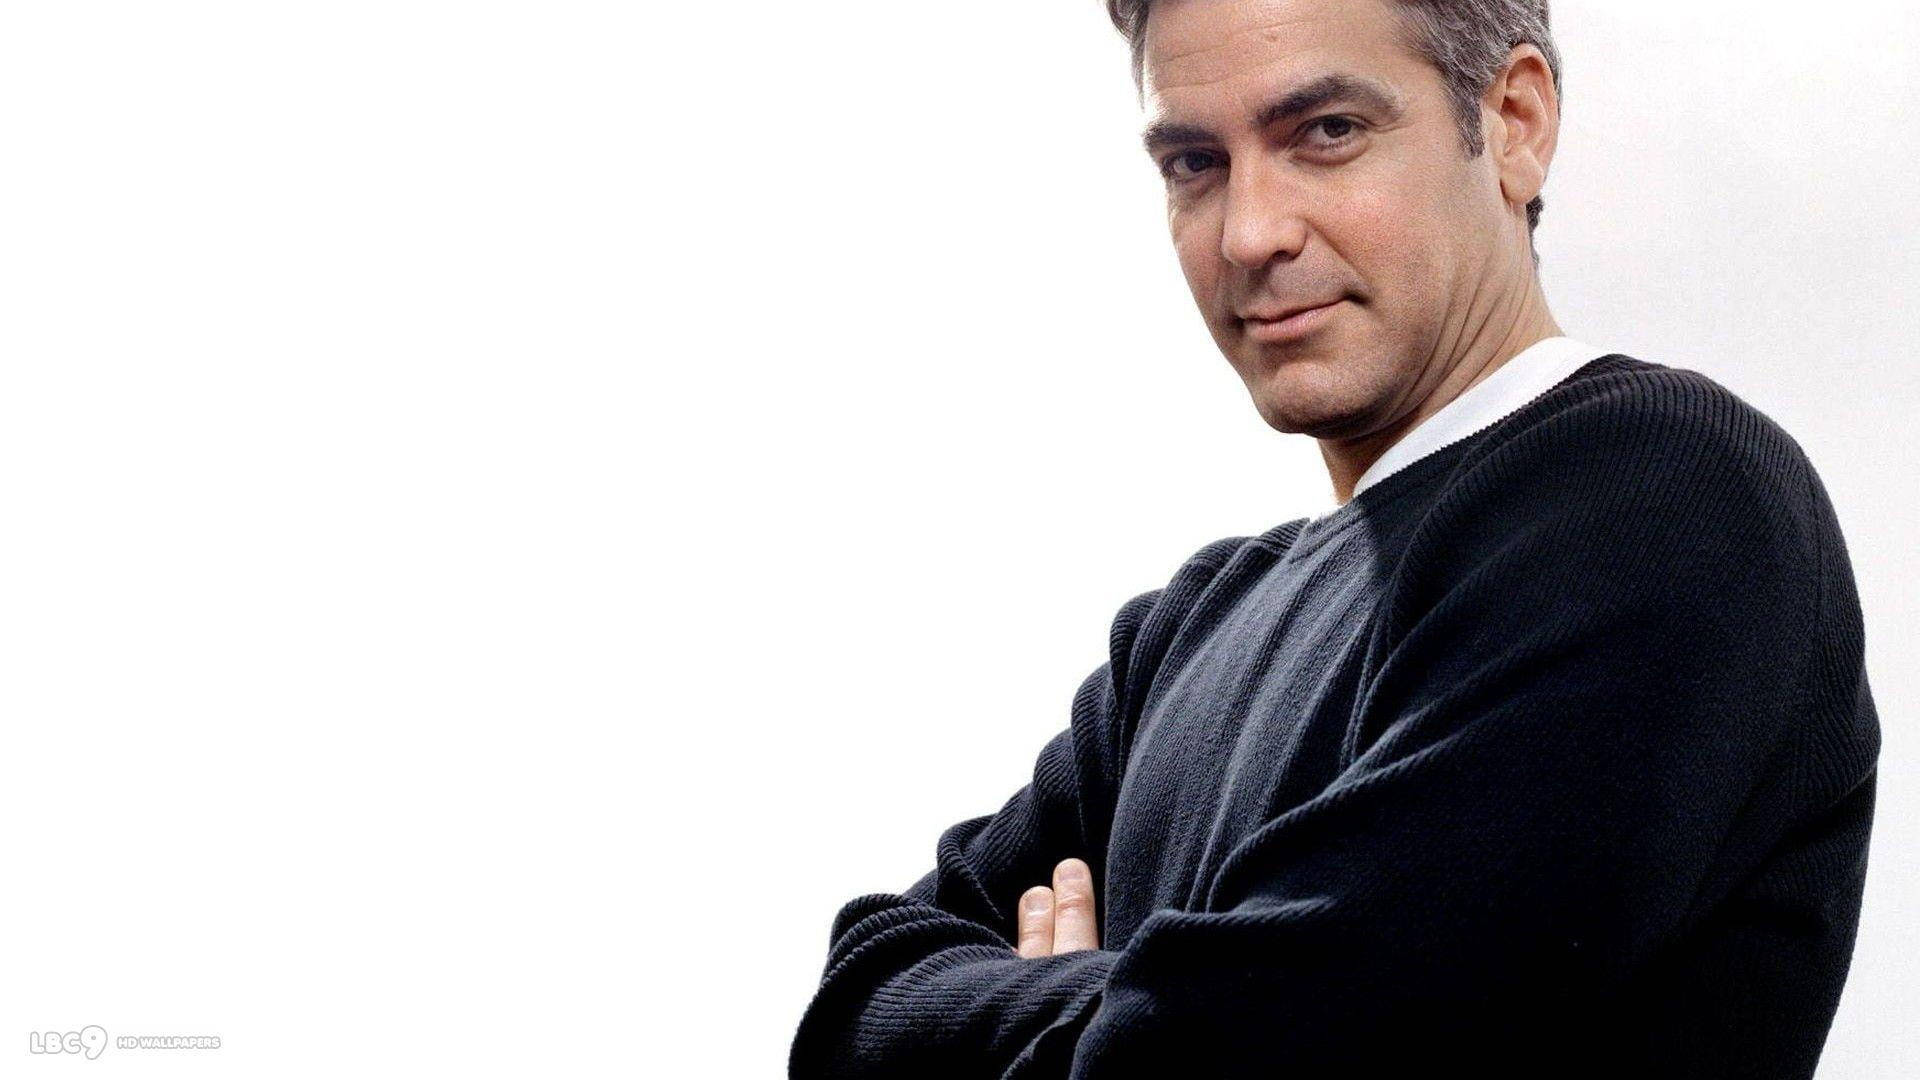 Рост и фигура Джорджа Клуни: фотографии красоты и грации